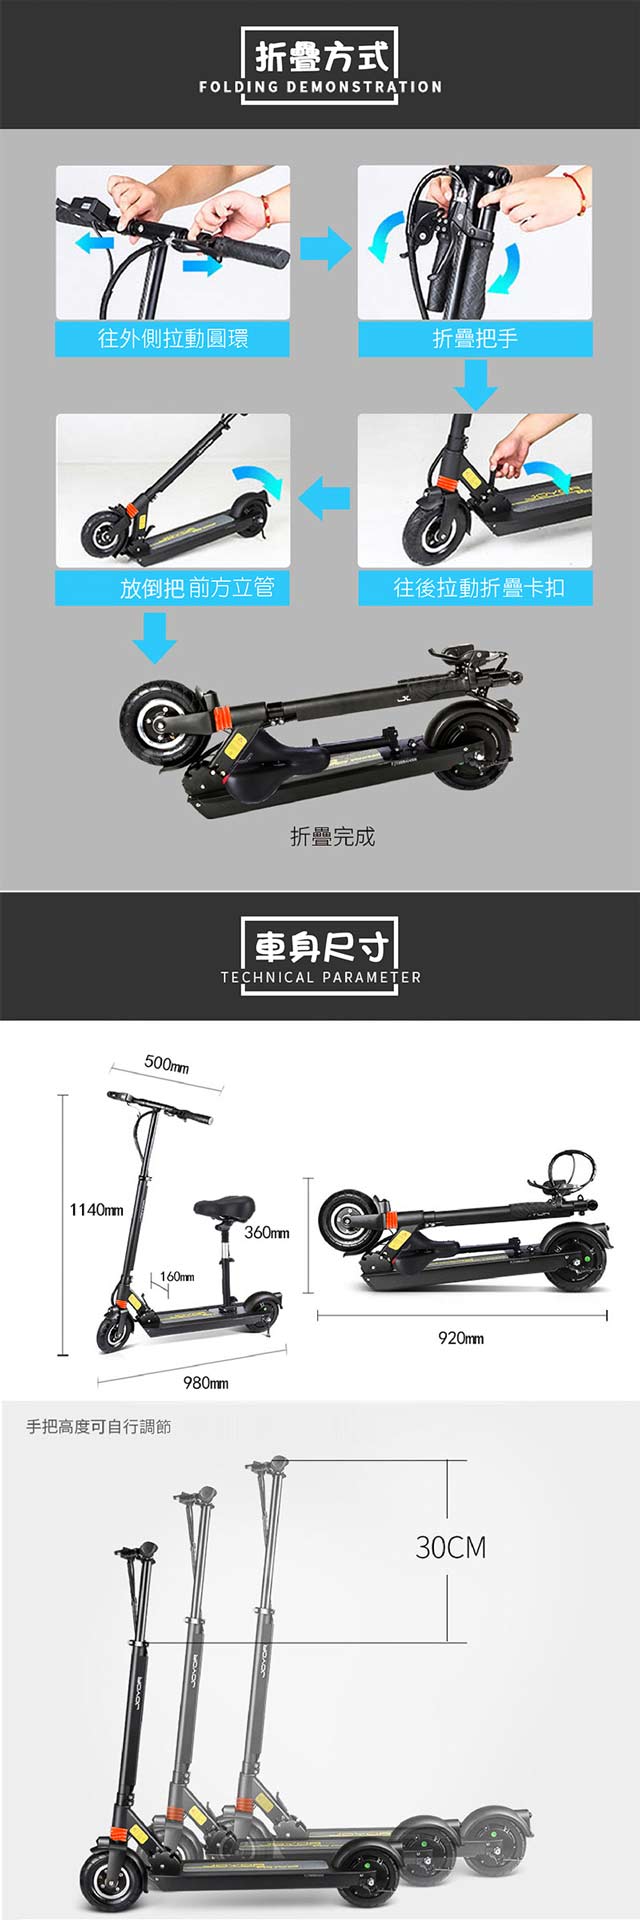 【JOYOR】 EF-178 36V 鋰電 LED燈 定速 電動滑板車 - 坐墊版